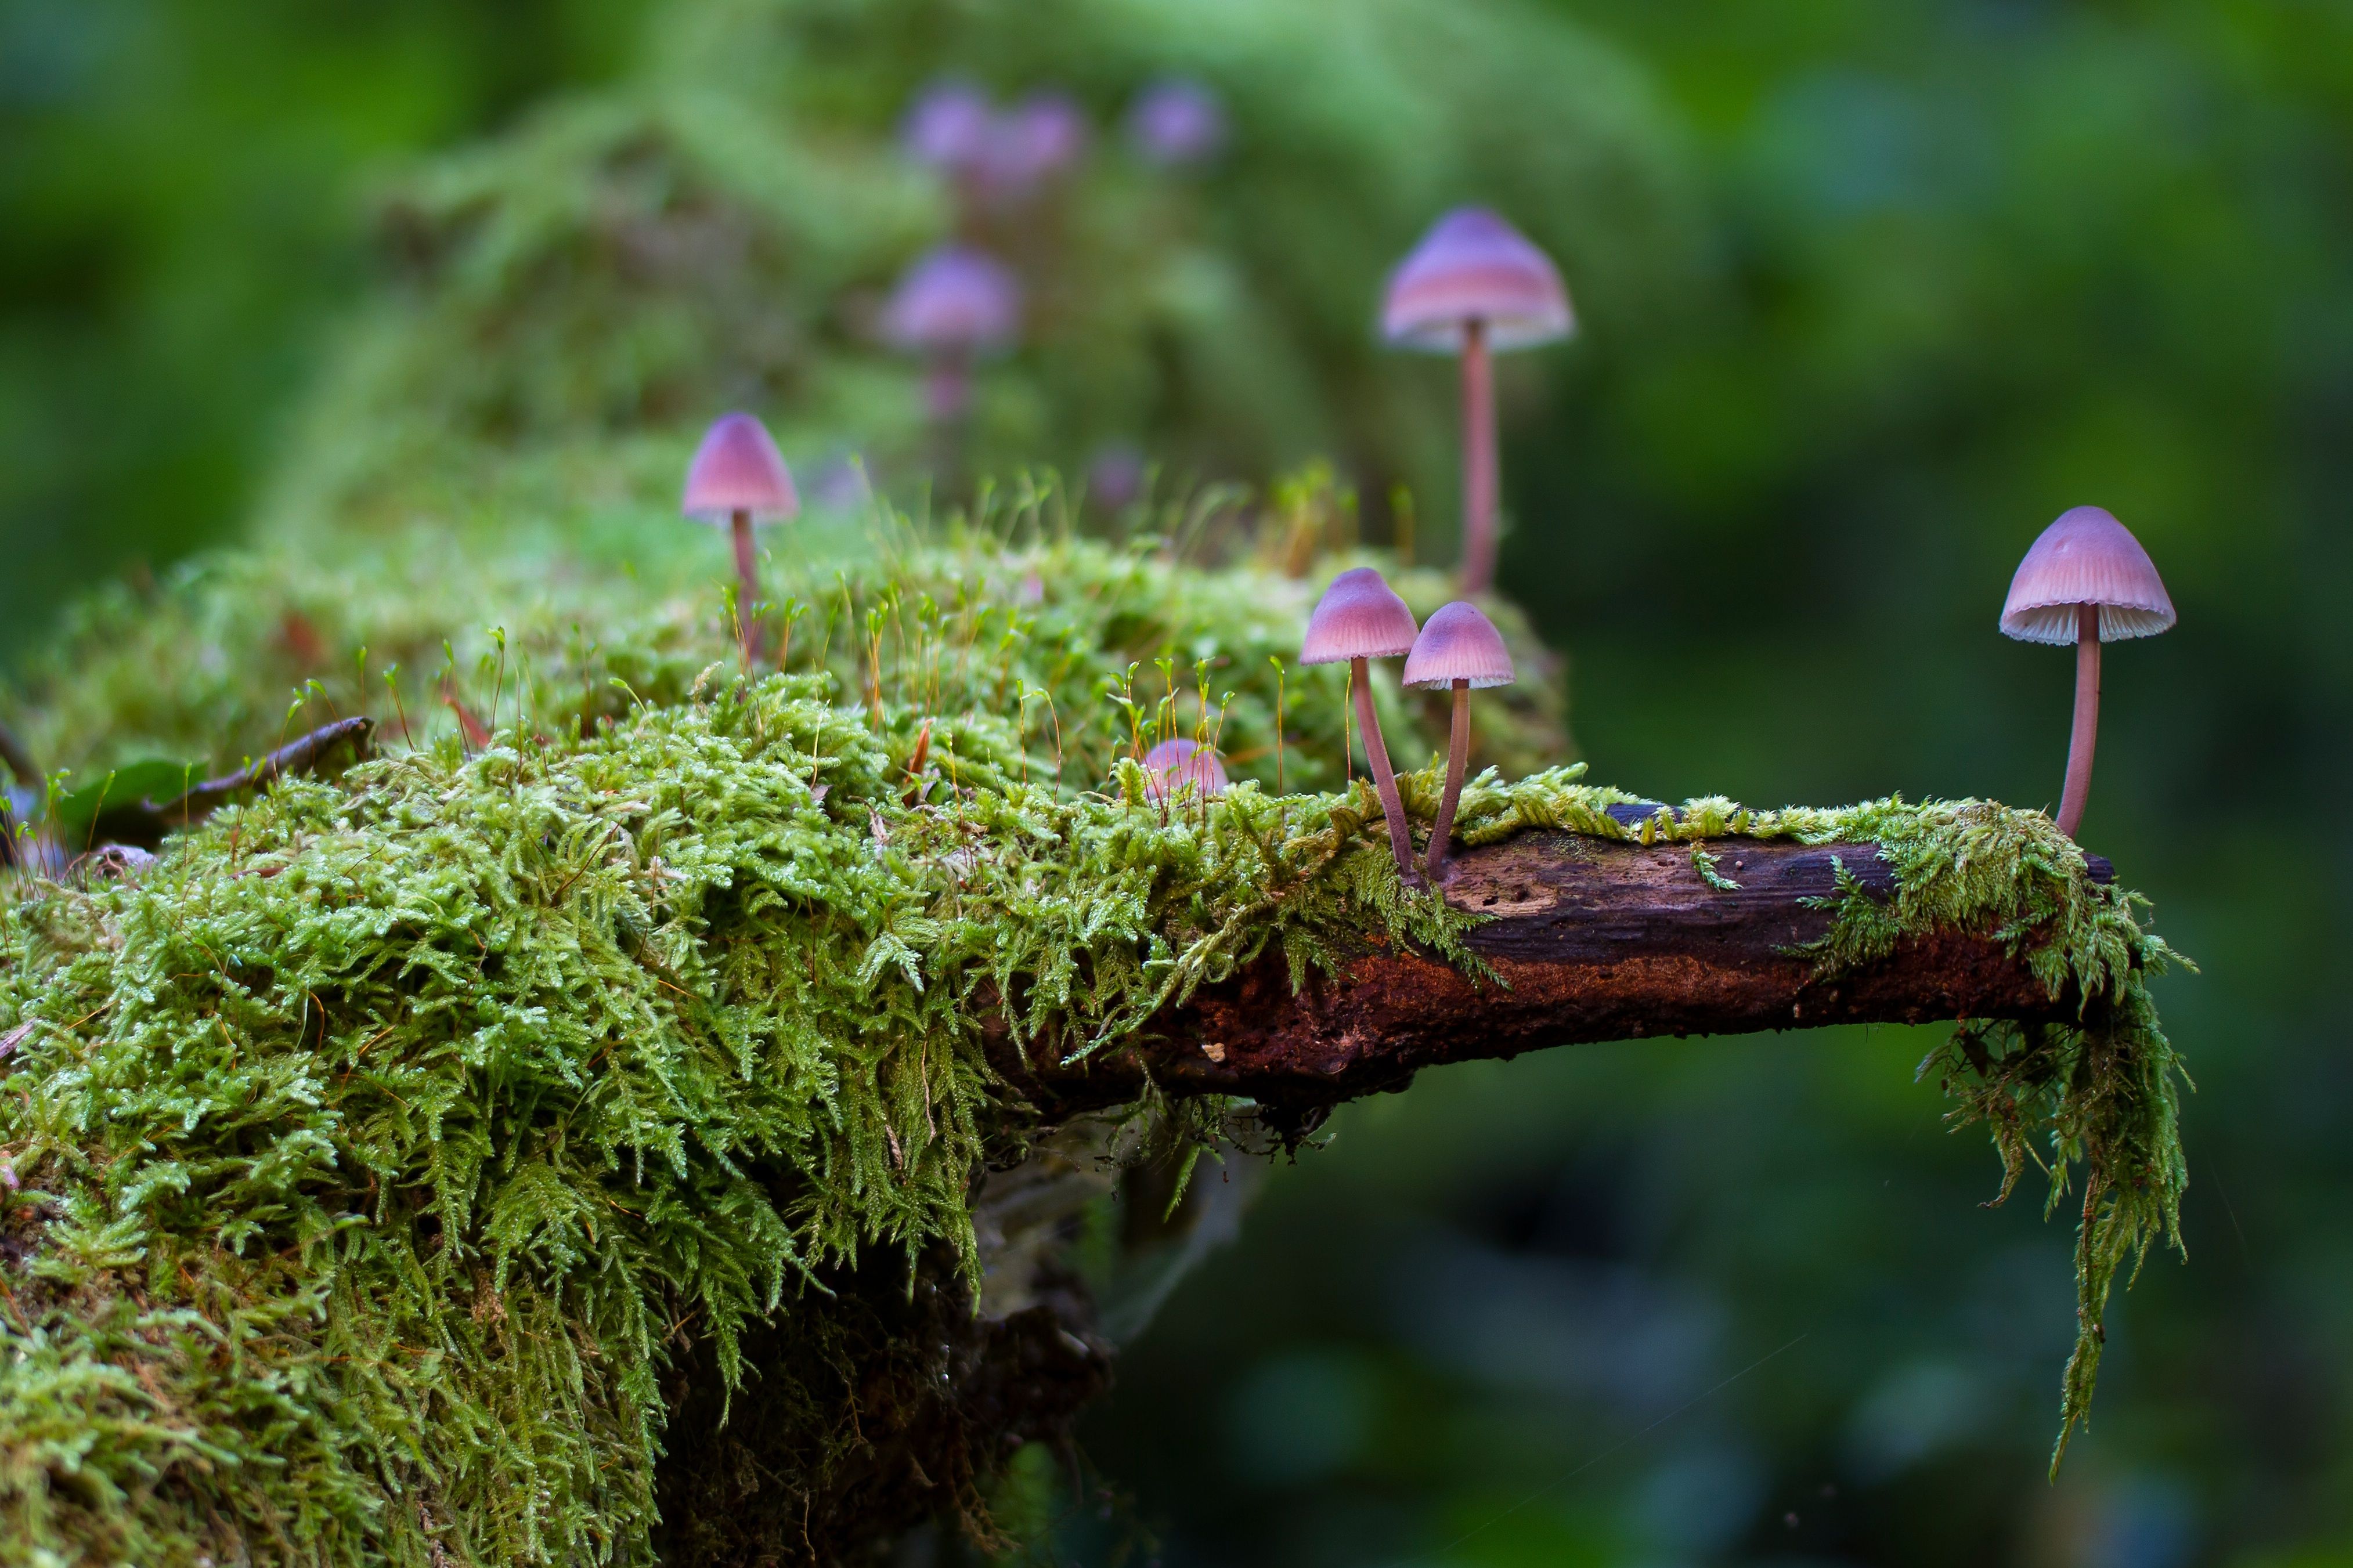 Tiny Mushrooms on a Log with Moss 4k Ultra HD Wallpaper